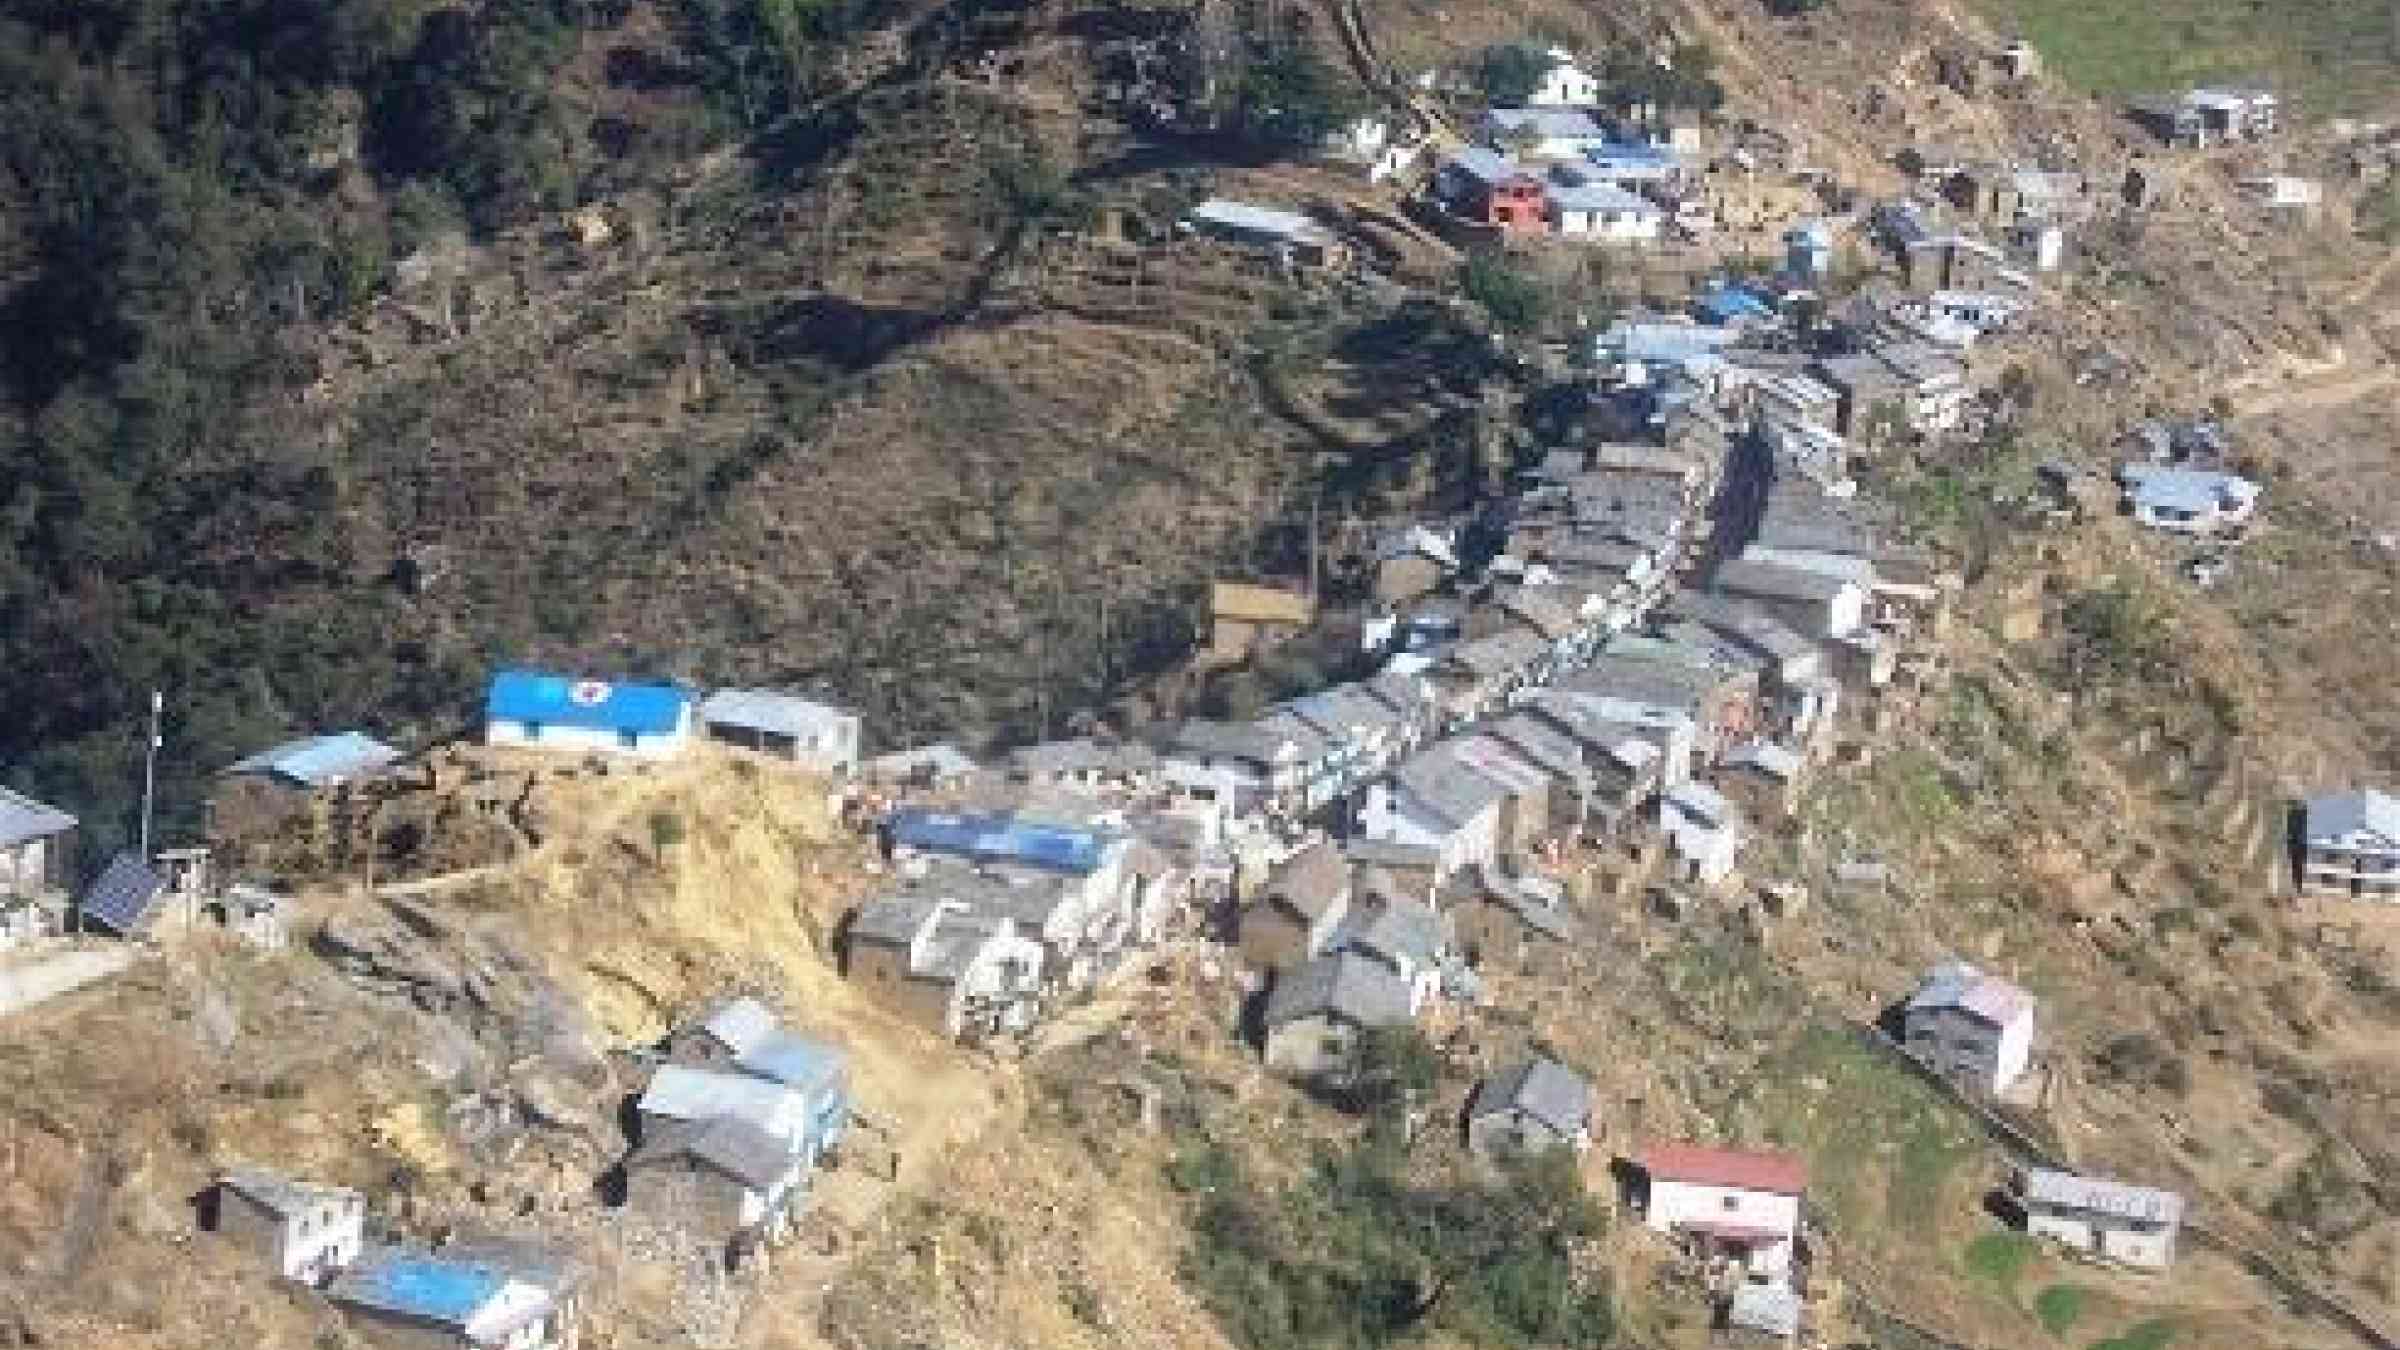 Naresh Newar/Irin http://www.irinnews.org/report/98381/no-early-warning-for-nepal-s-deadly-landslides